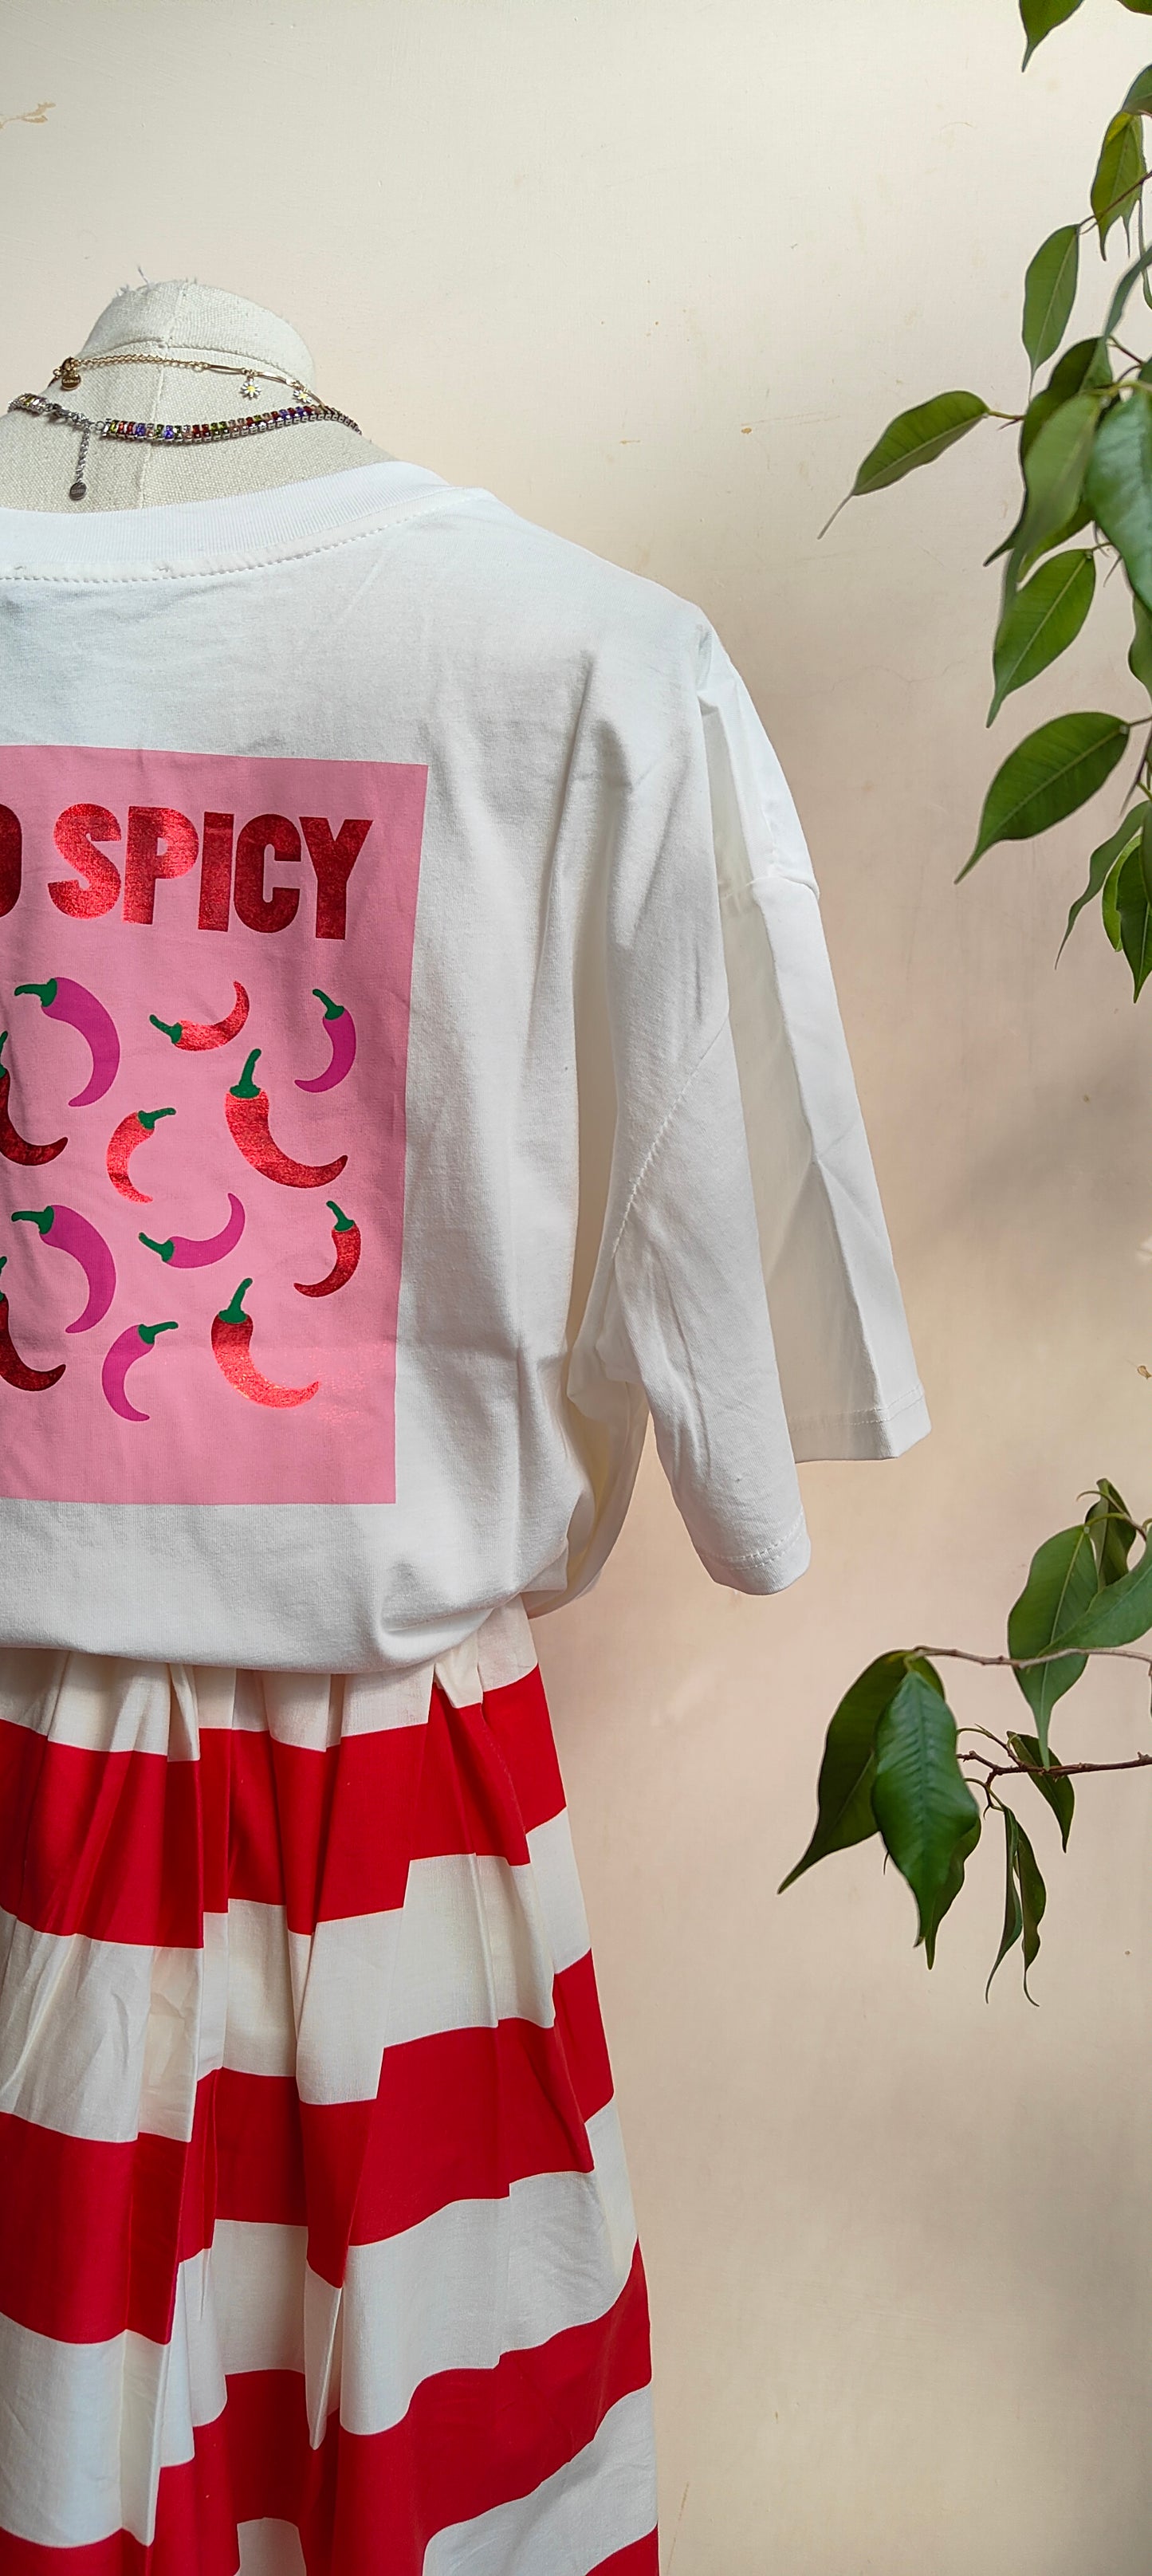 T-shirt spicy